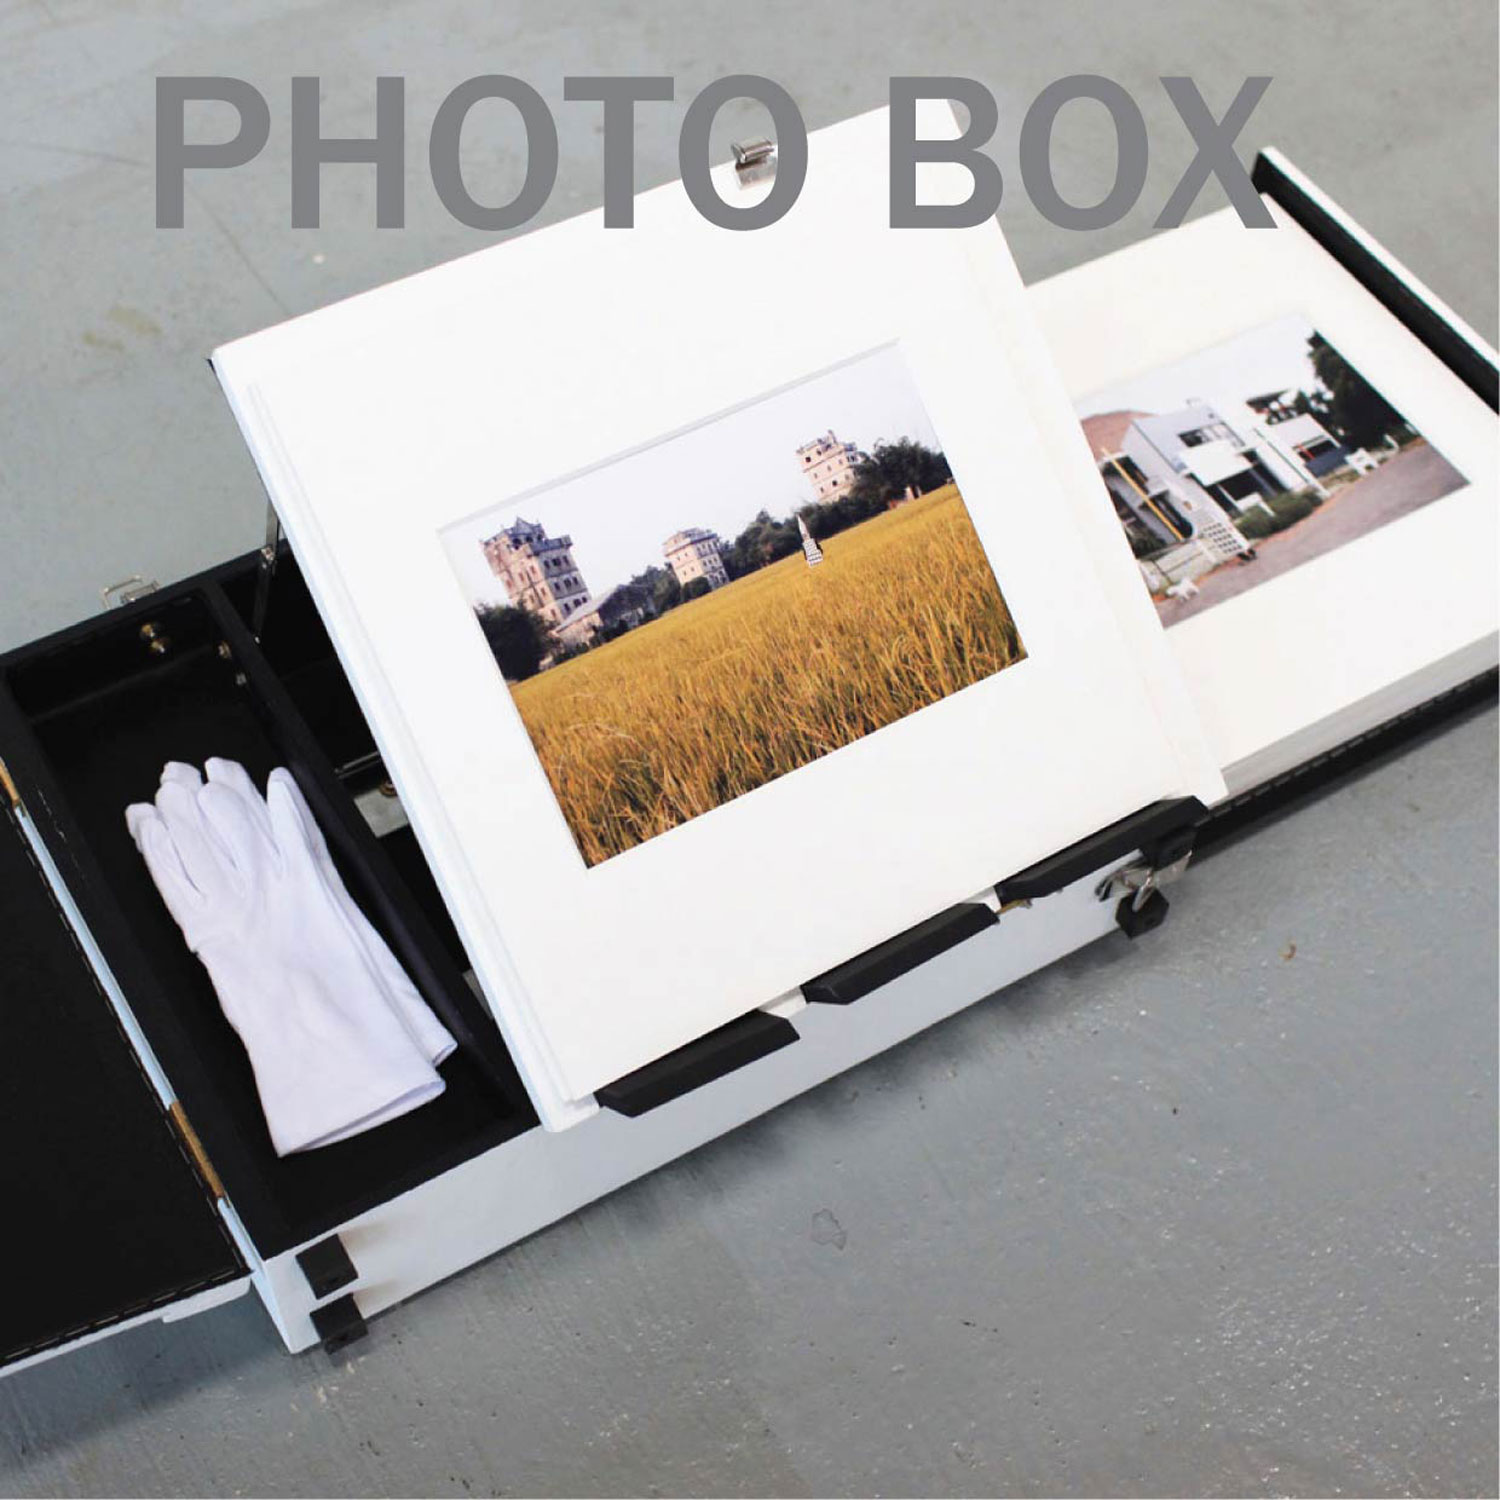   Photo Box  